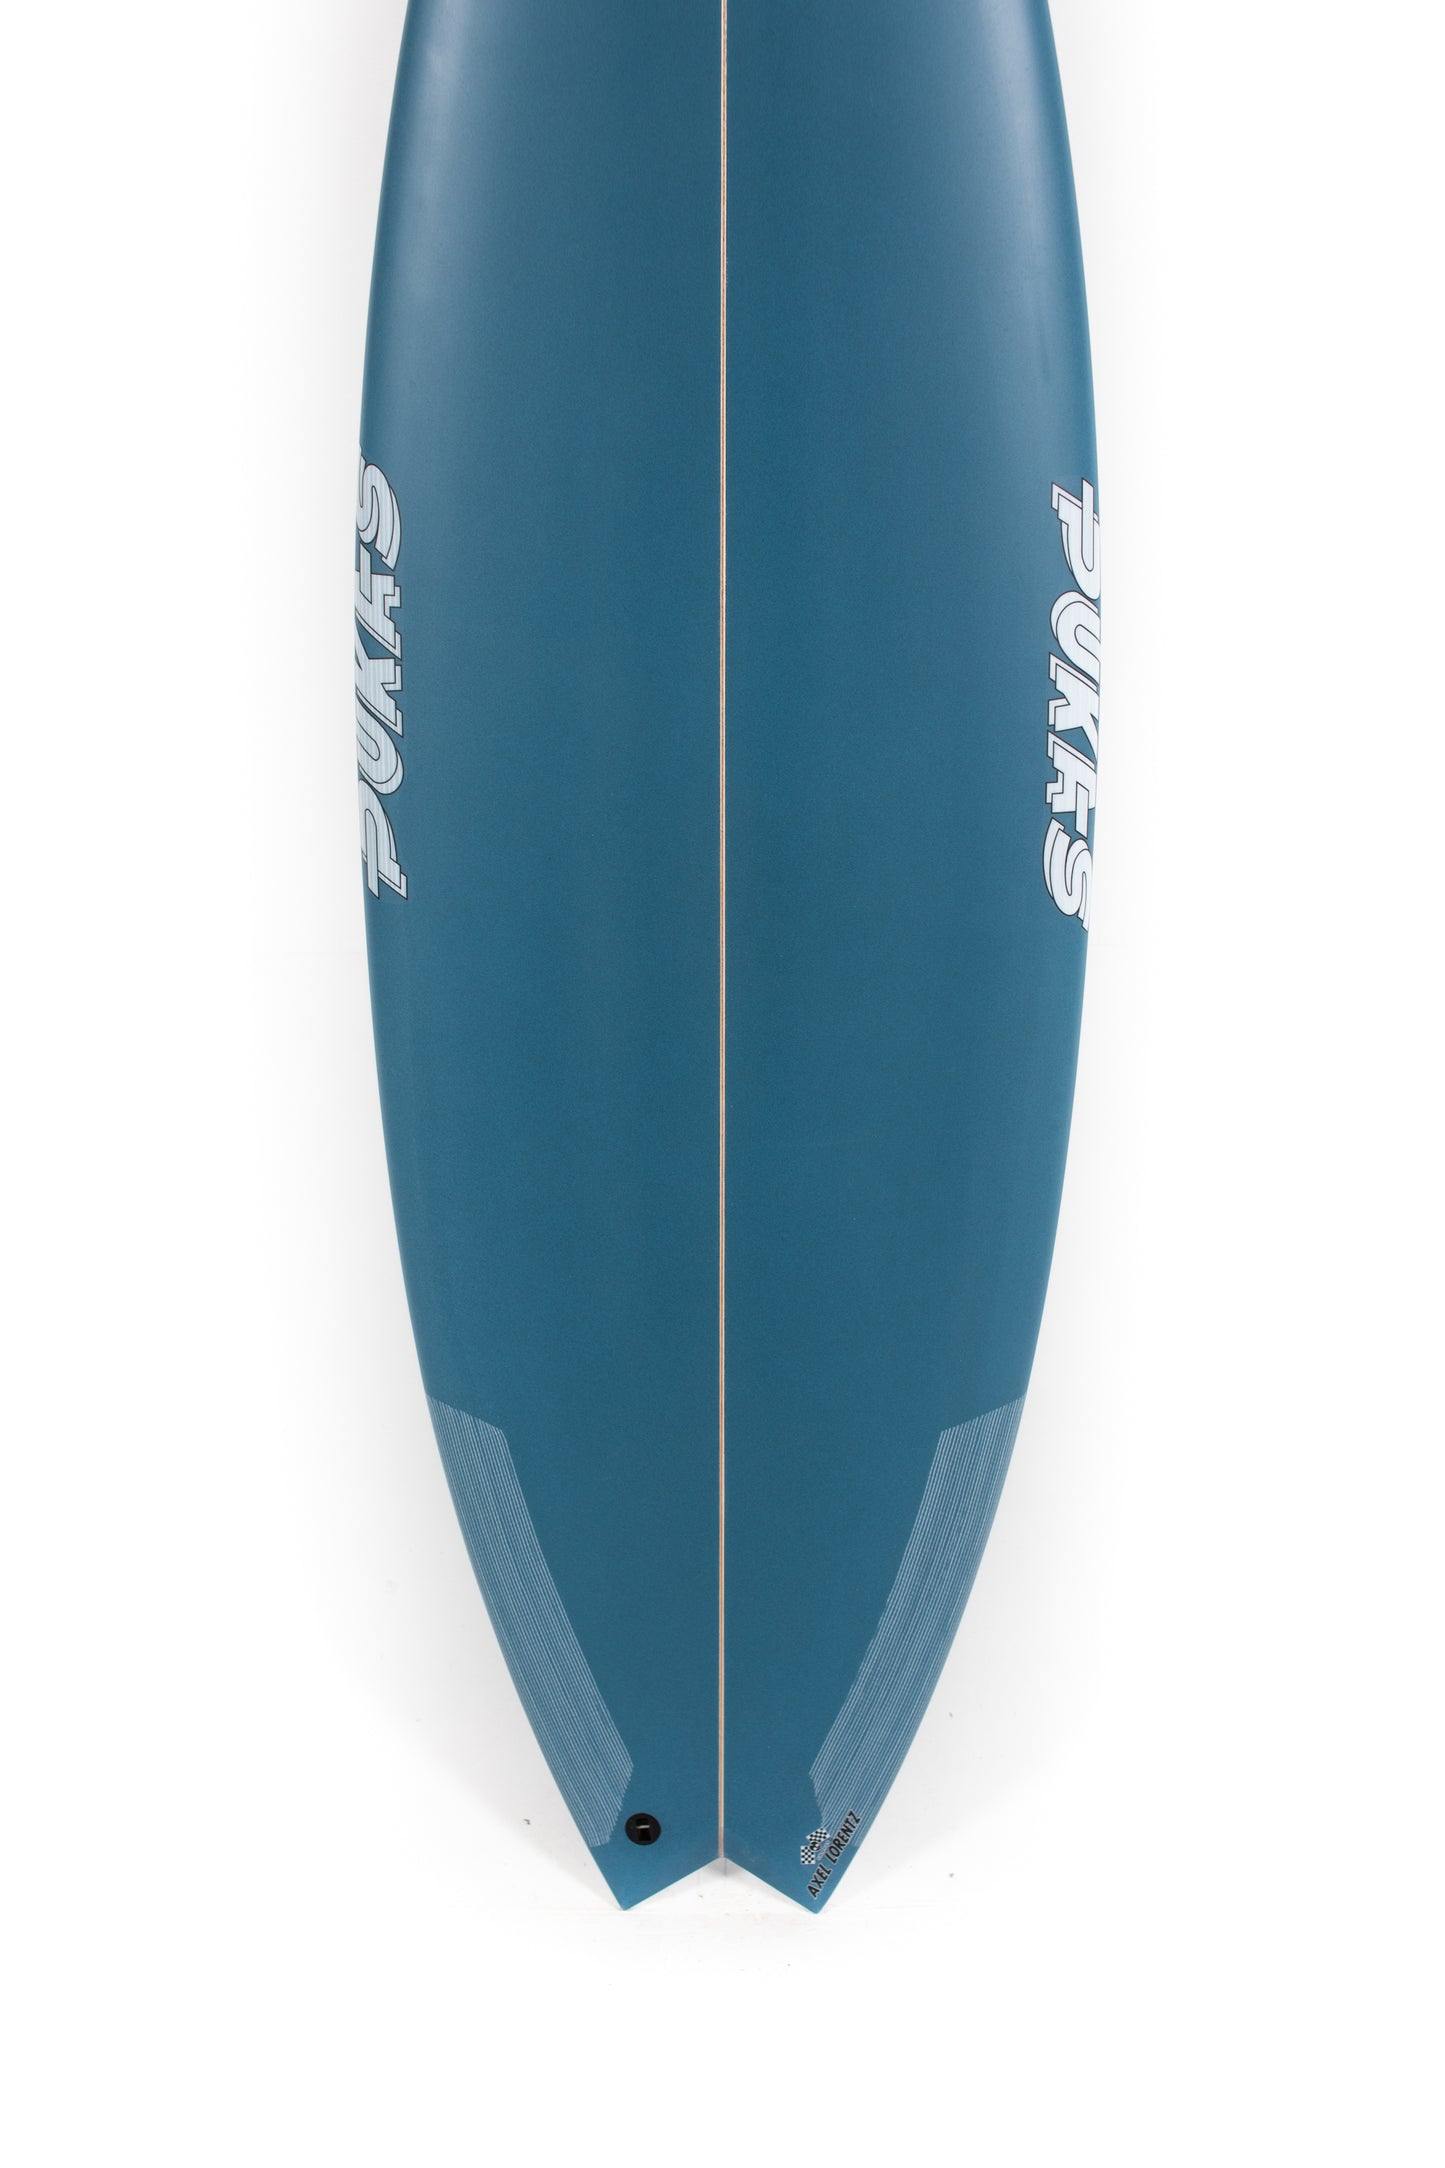 
                  
                    Pukas Surf Shop - Pukas Surfboard - DARK by Axel Lorentz - 5’11” x 19,38 x 2,34 - 28,76L - AX09202
                  
                